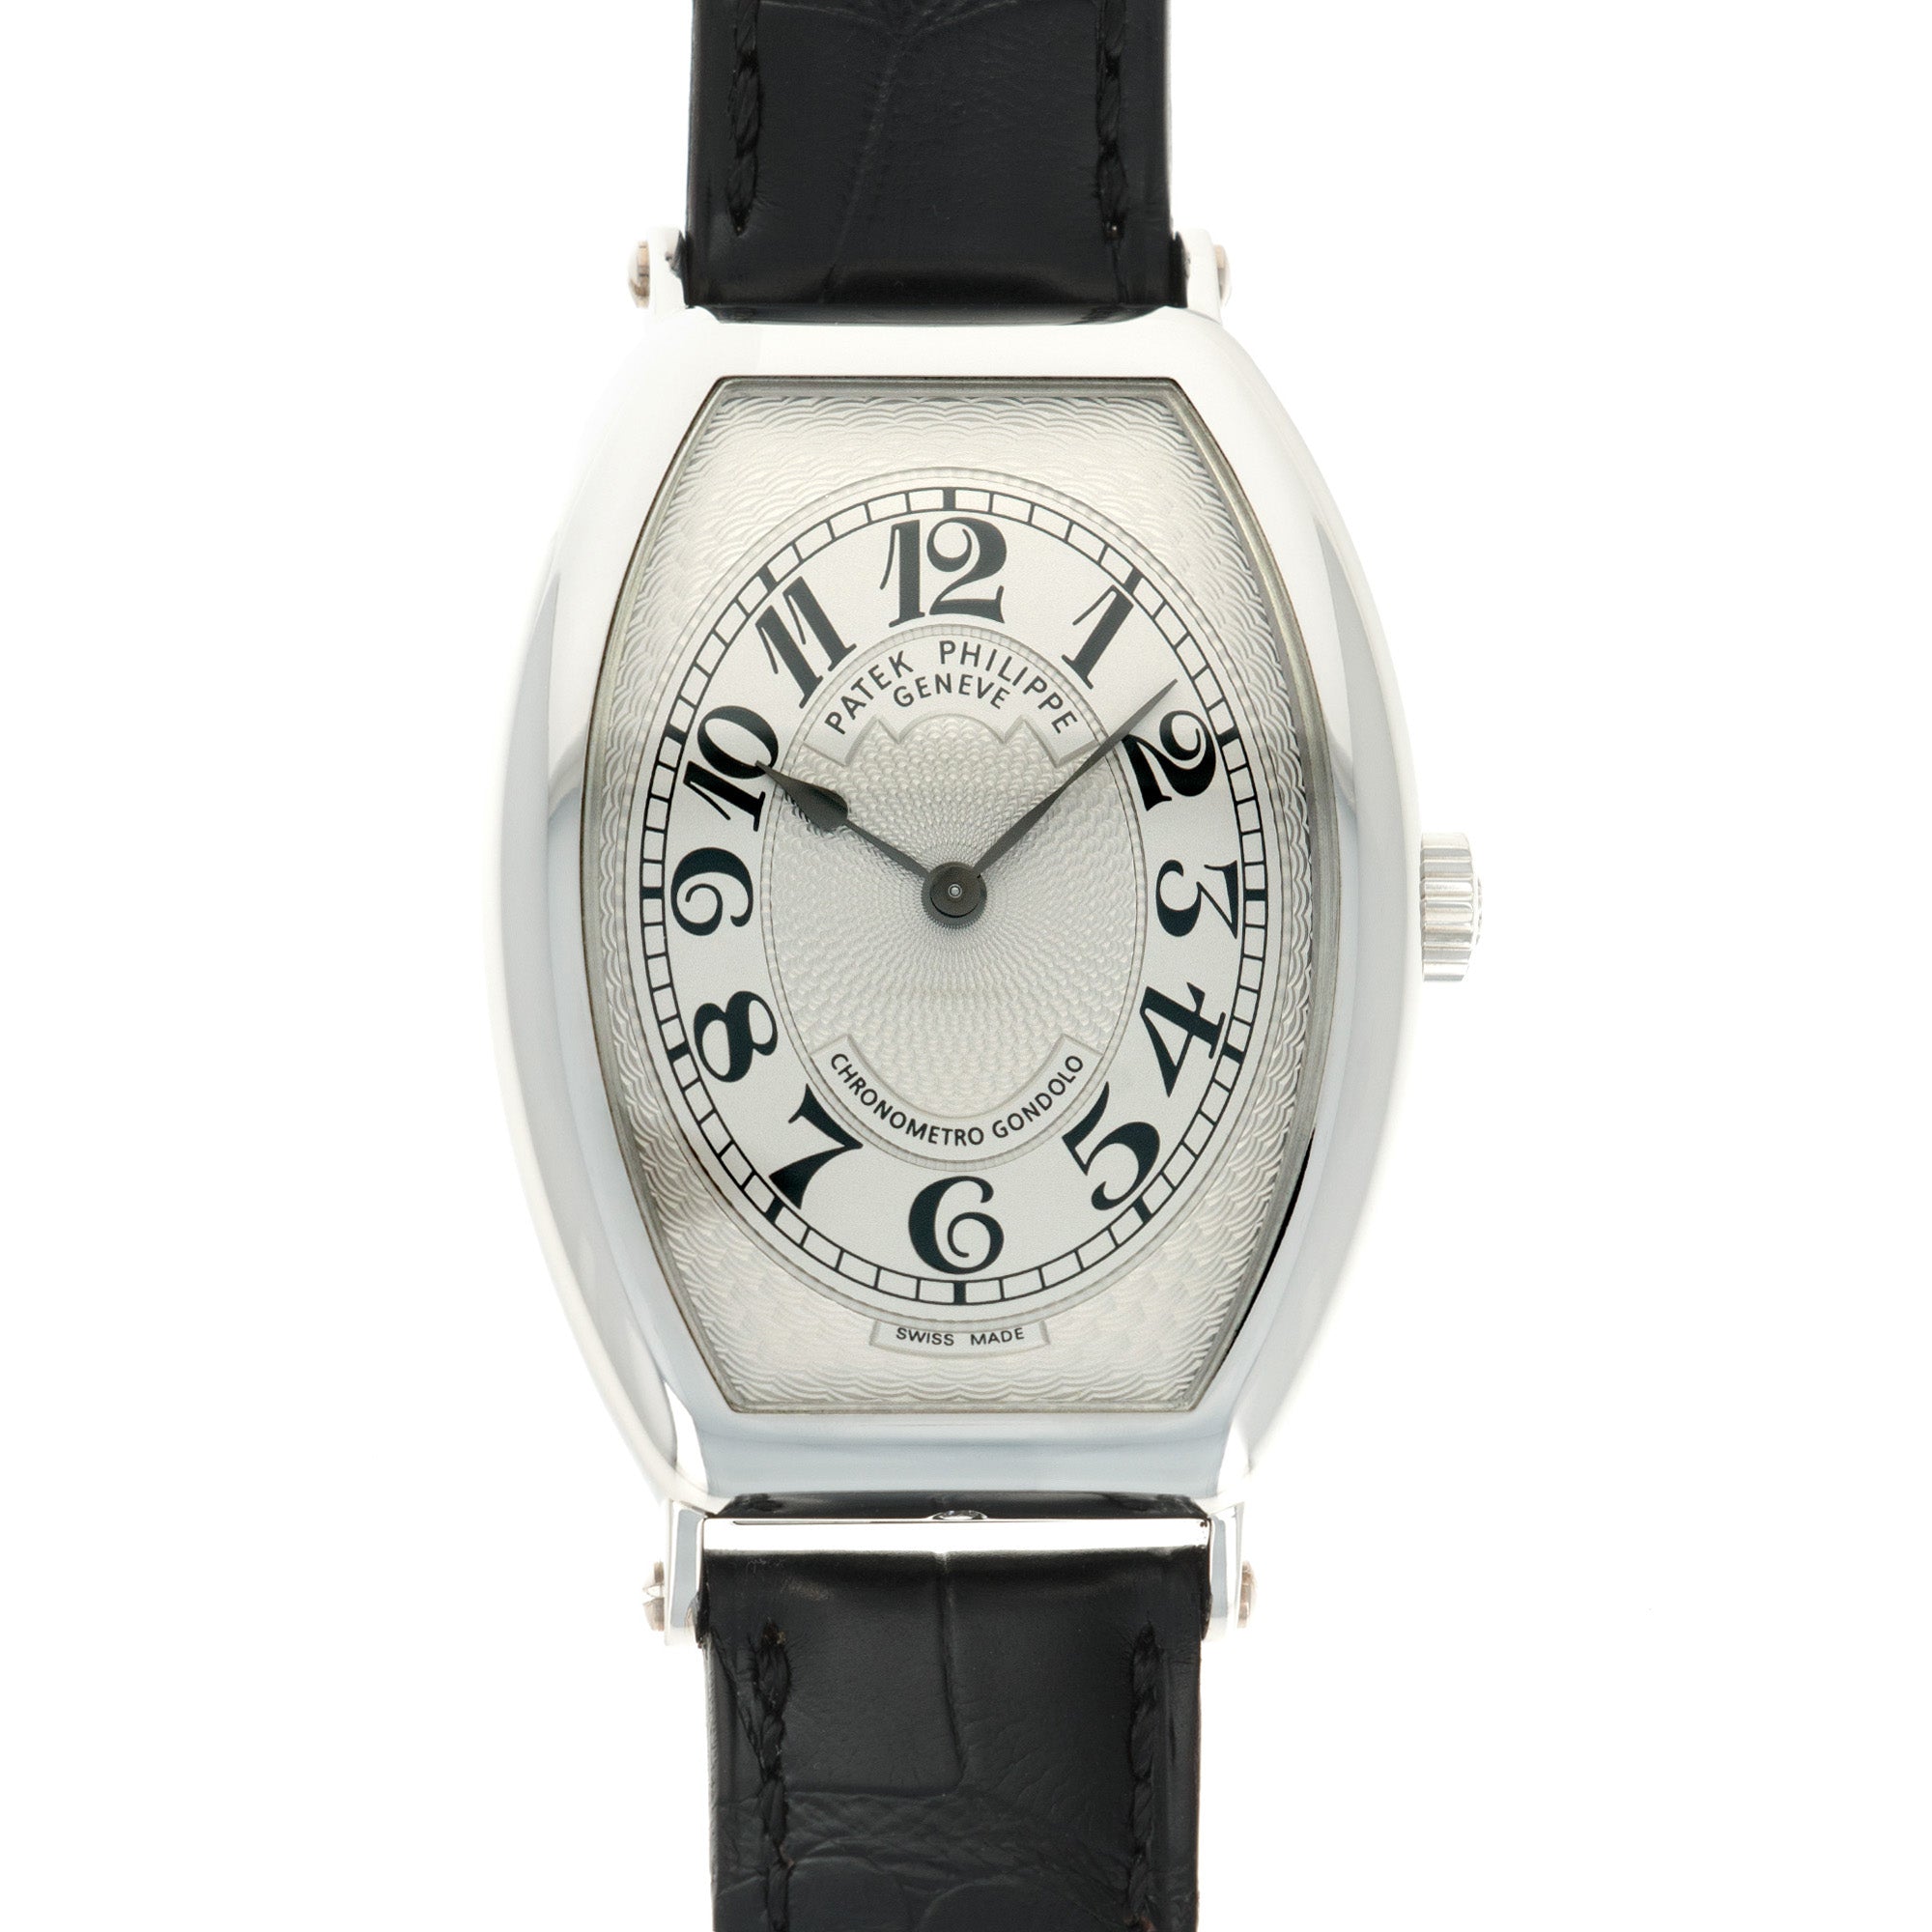 Patek Philippe - Patek Philippe Platinum Gondolo Watch, Ref. 5098 - The Keystone Watches